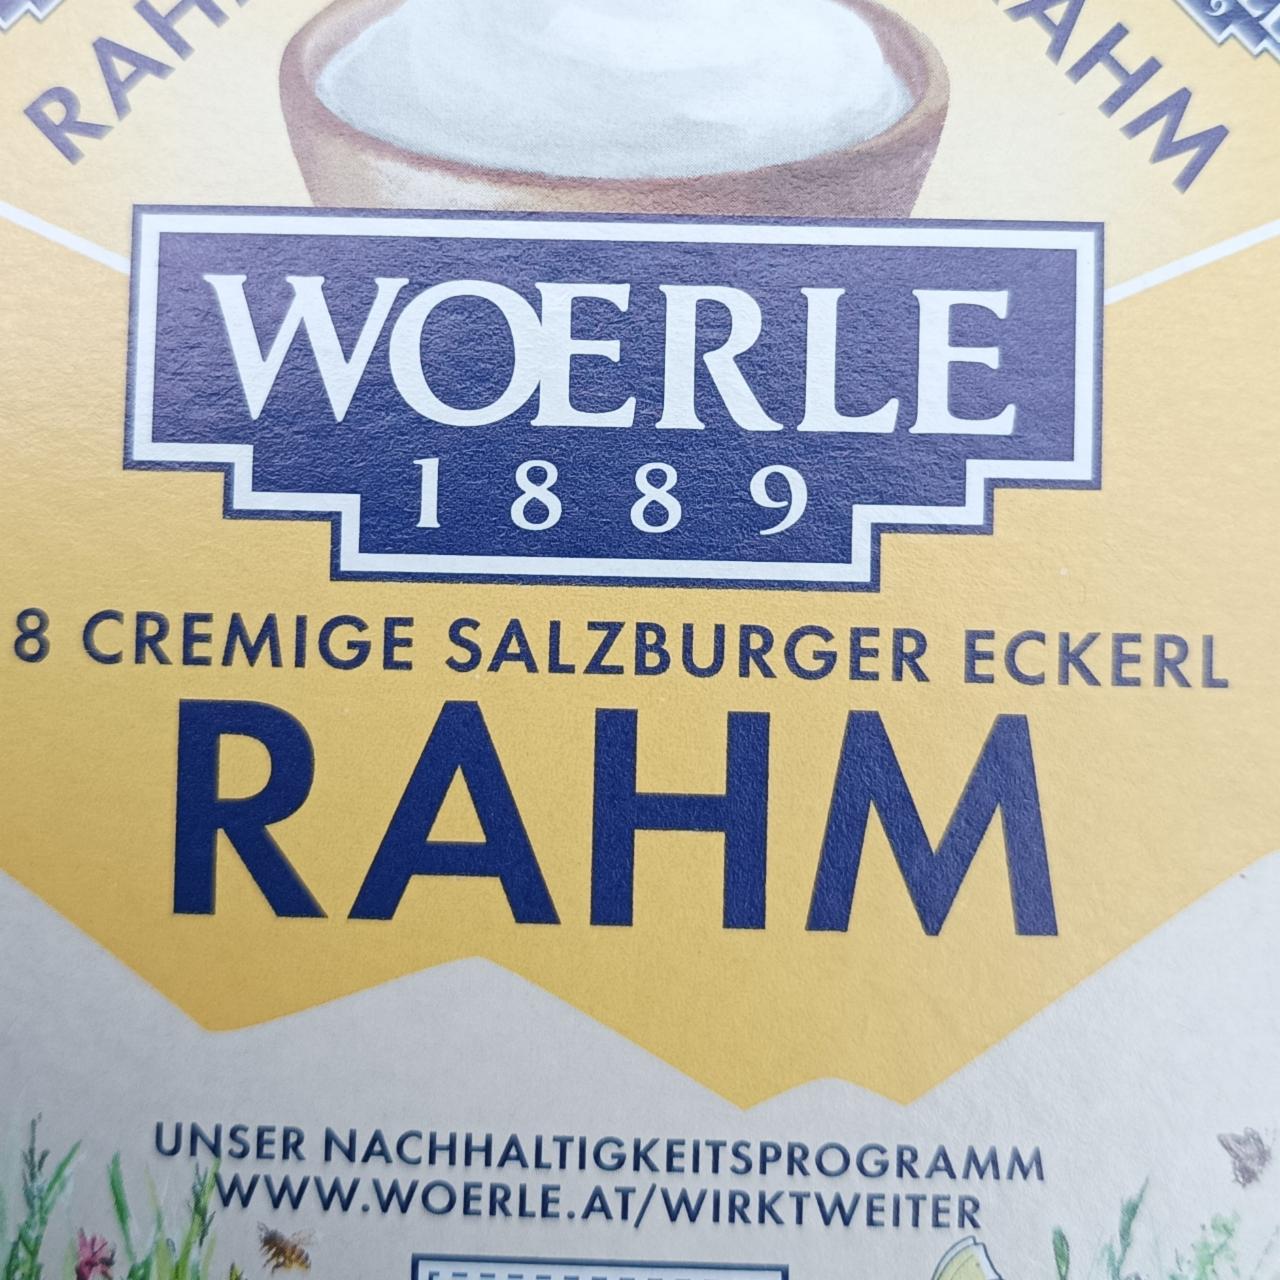 Fotografie - Rahm 8 cremige salzburger eckerl Woerle